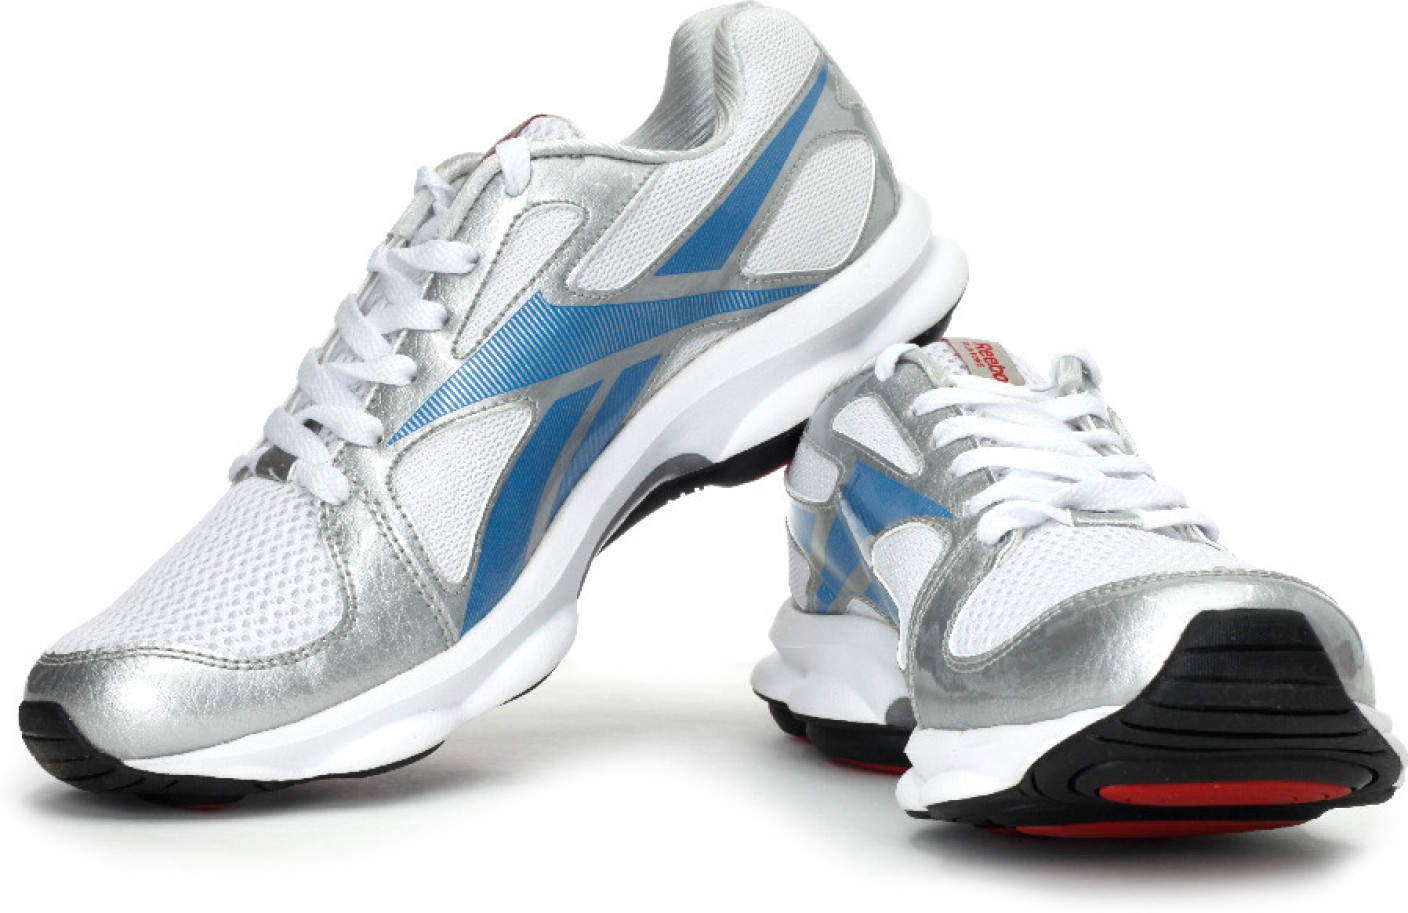 Reebok Runtone Doheny Lp Running Shoes For Men - Buy Silver, Blue, Wht ...